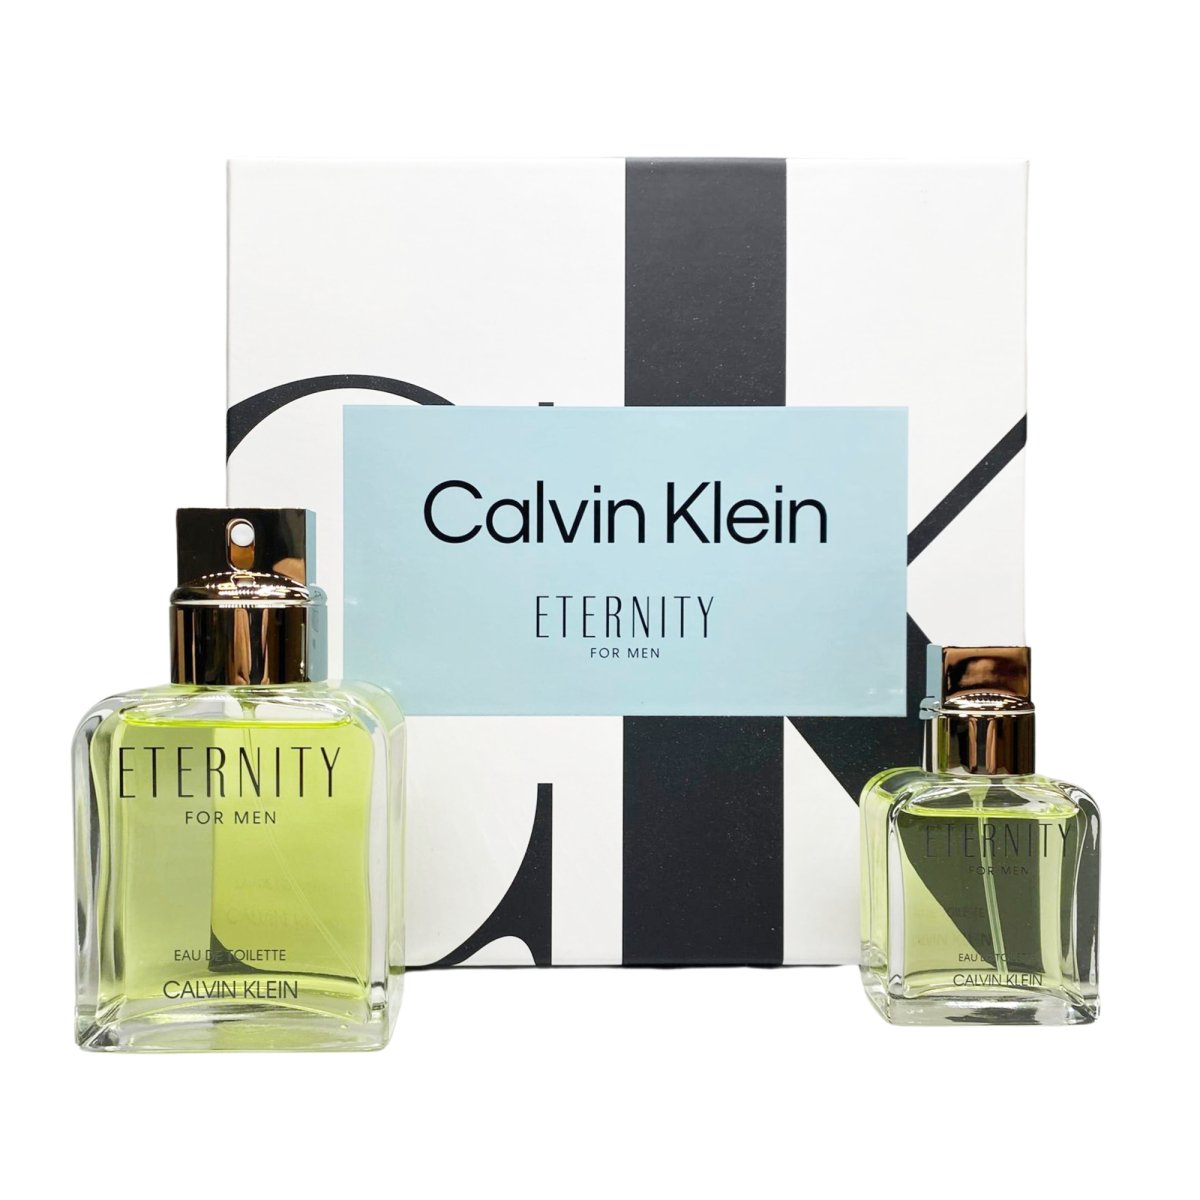 Calvin Klein Men's Eternity Gift Set Fragrances - Calvin Klein - Gift Set